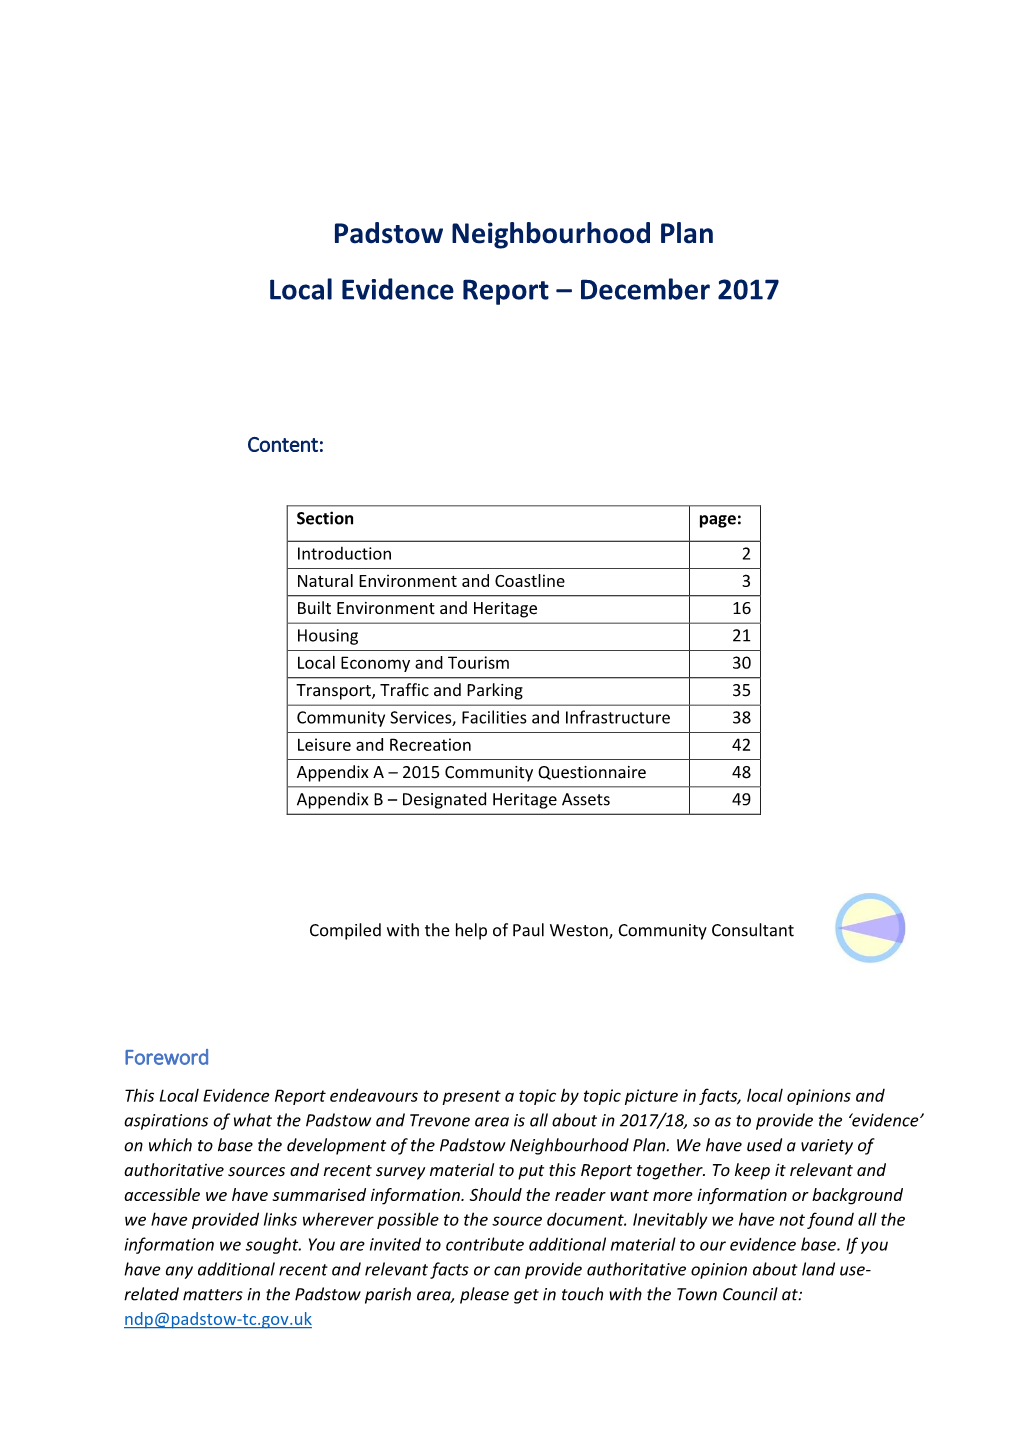 Padstow Neighbourhood Plan Local Evidence Report – December 2017